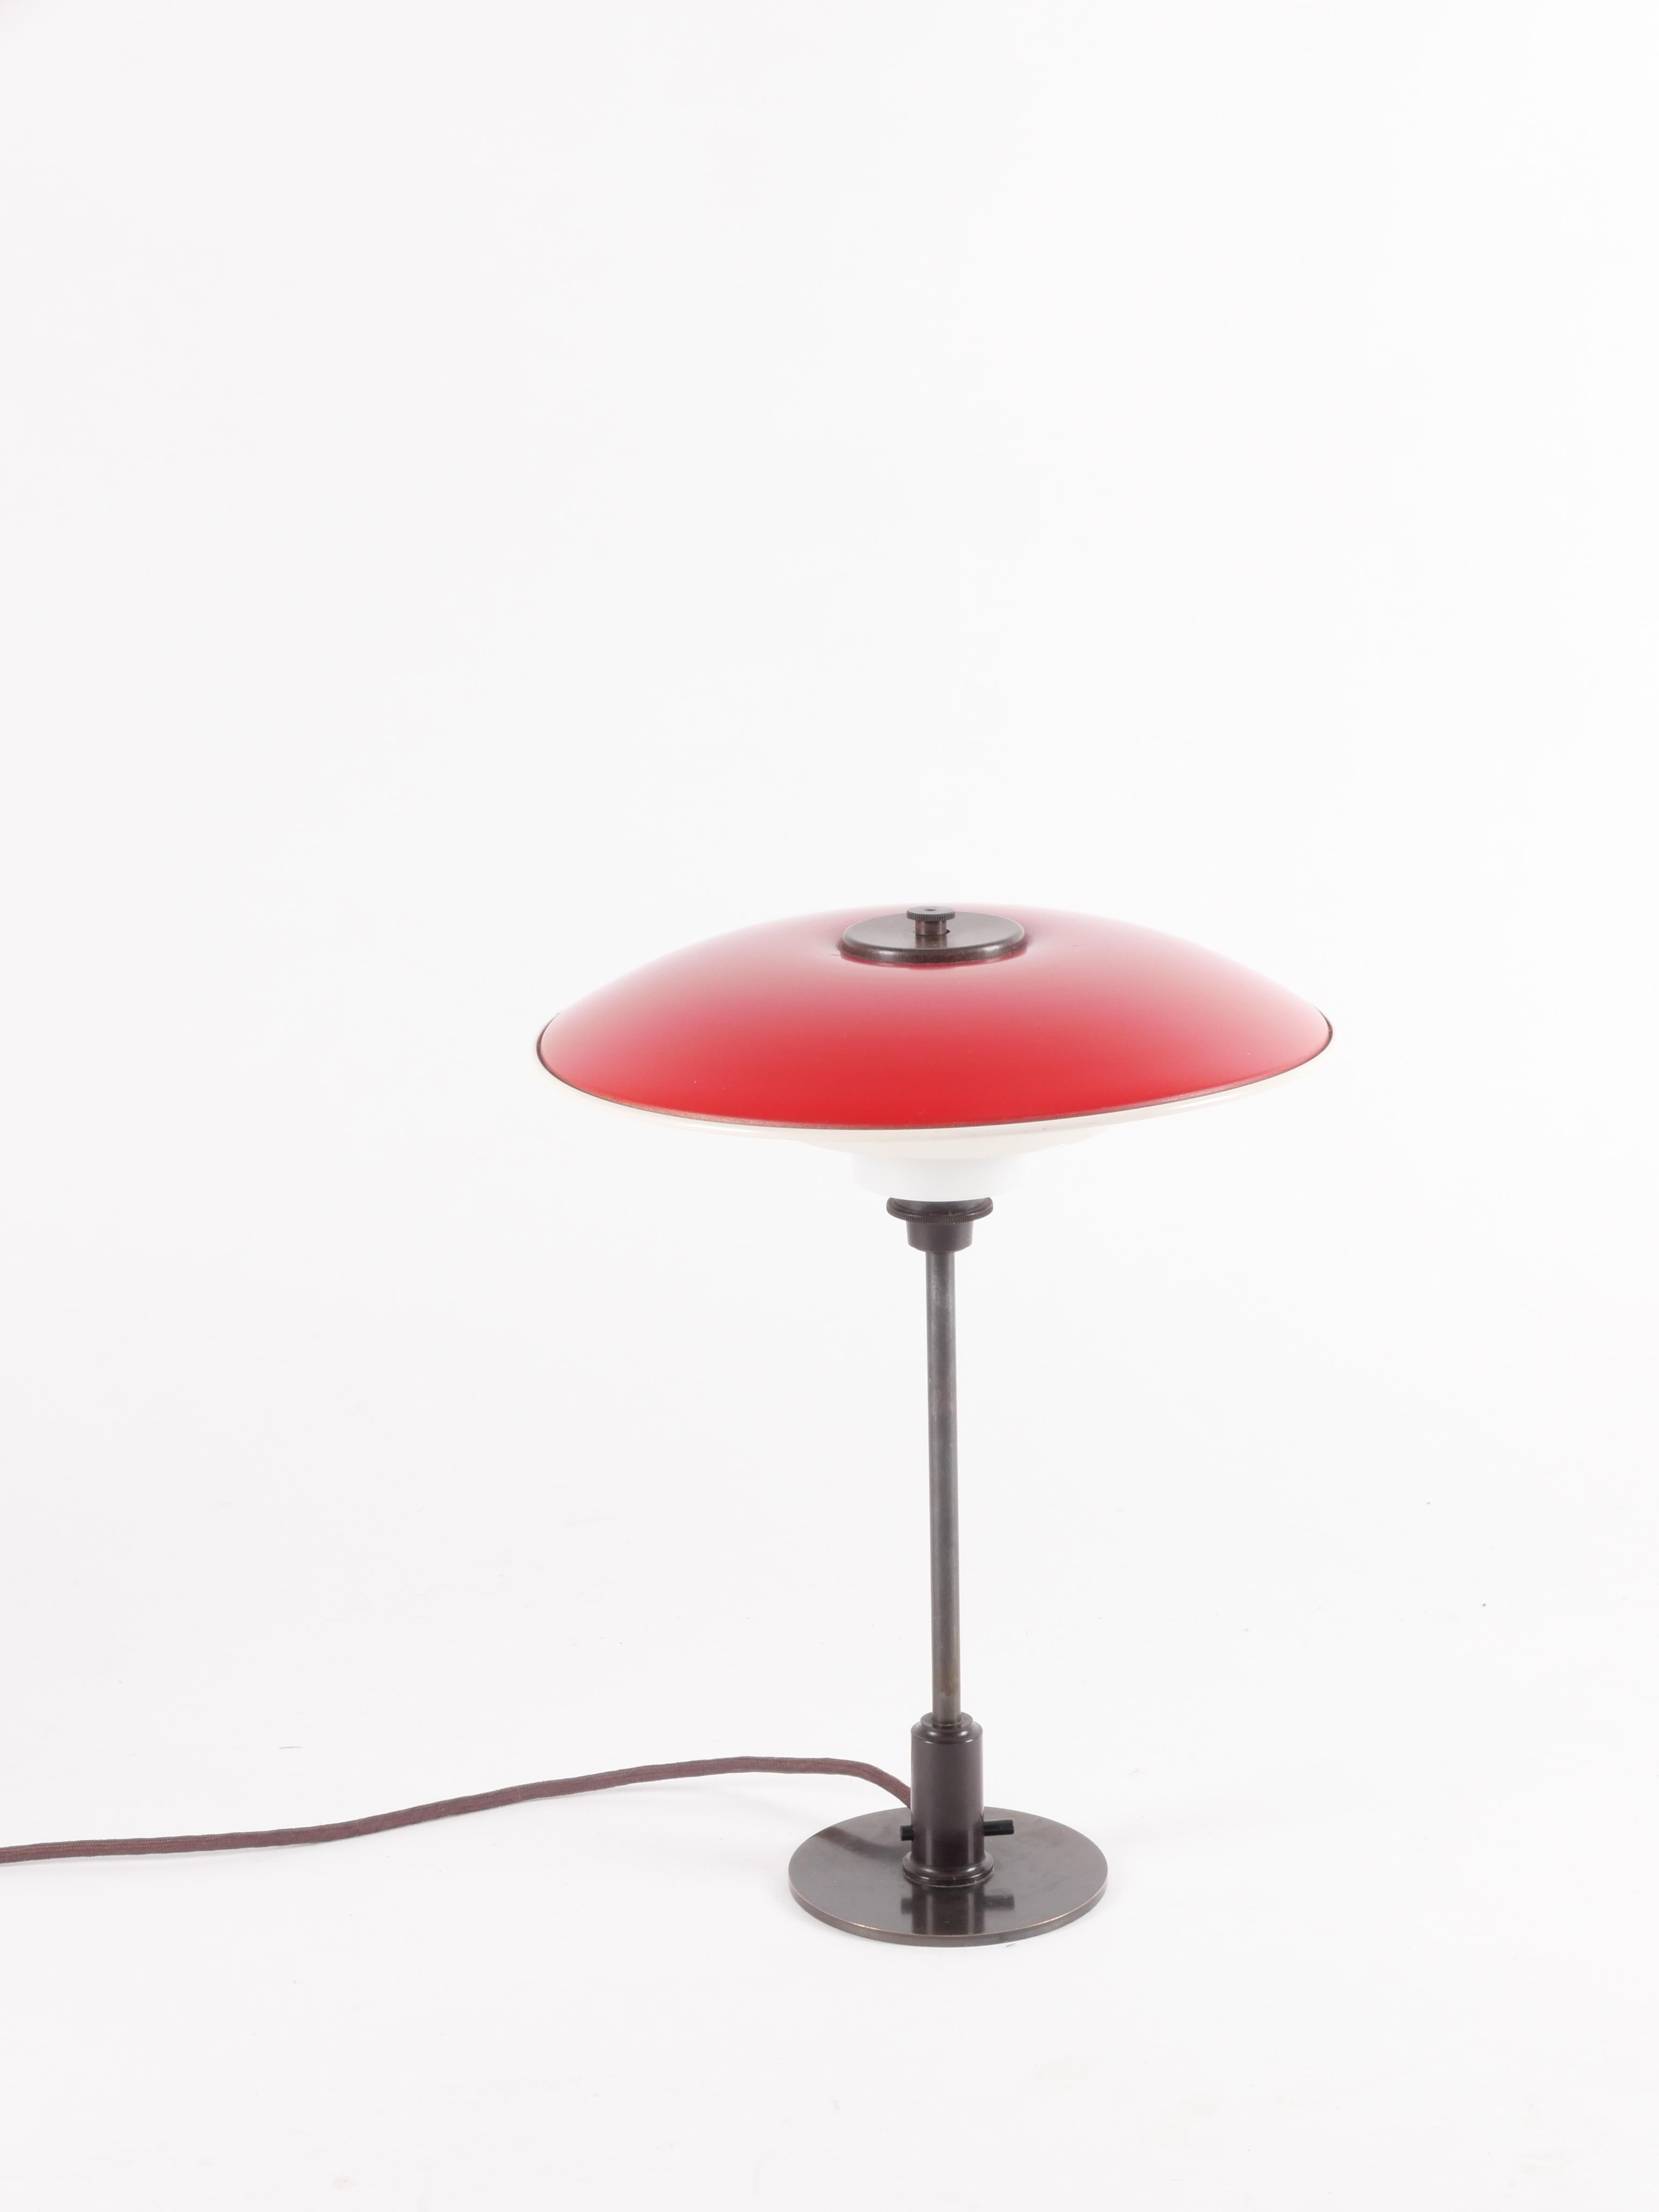 Scandinavian Modern Vintage 1940s Poul Henningsen Table Lamp For Sale